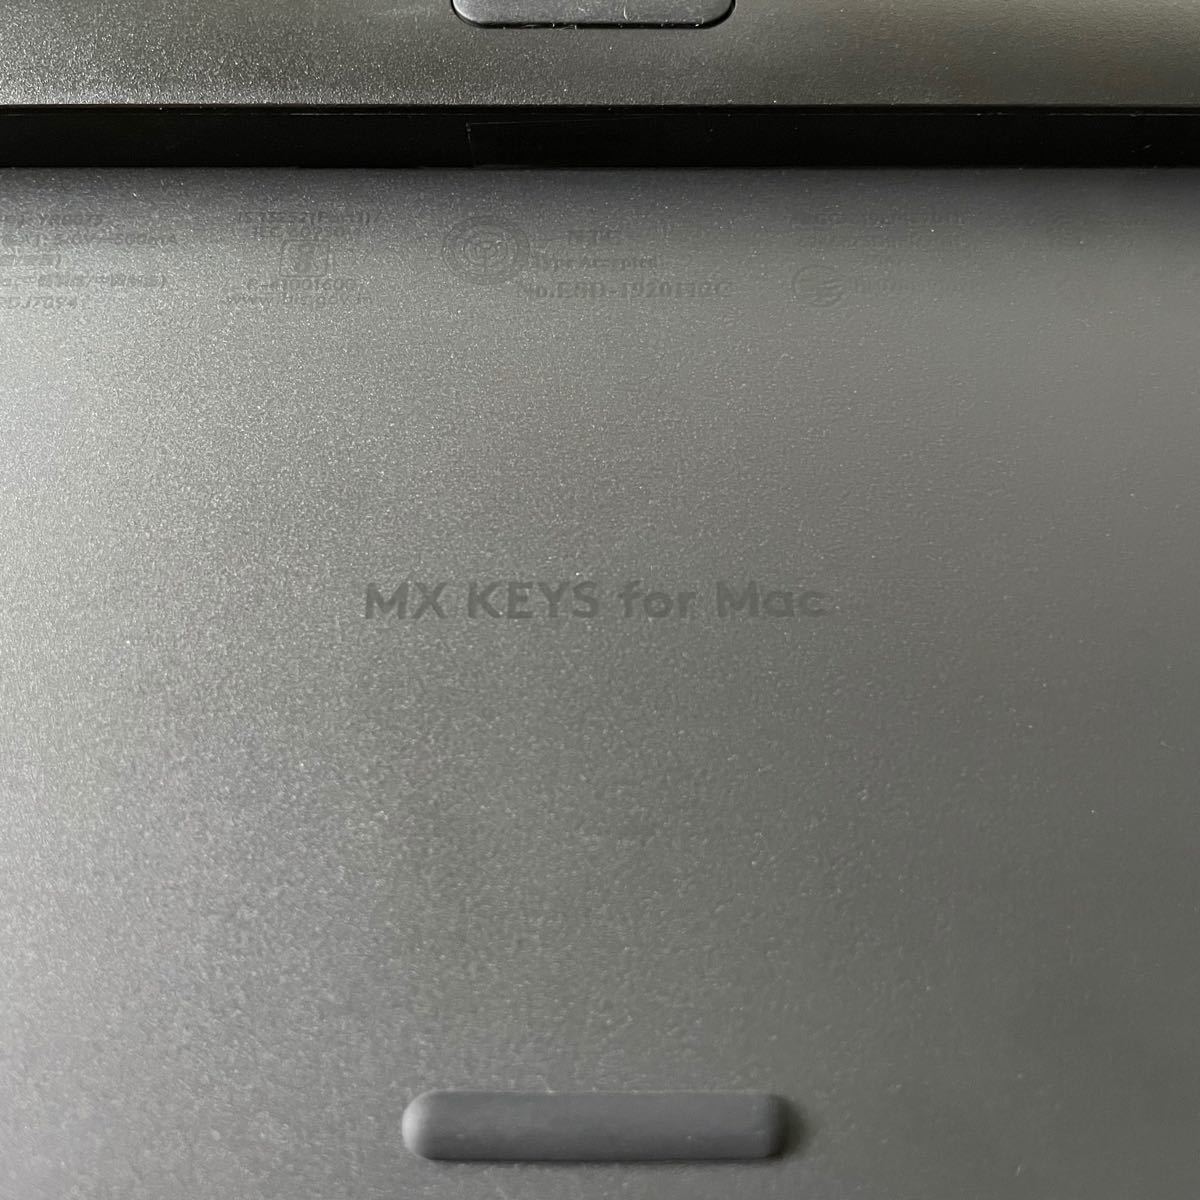 Logicool MX KEYS for Mac MX800 US配列  ワイヤレスキーボード スペースグレイ